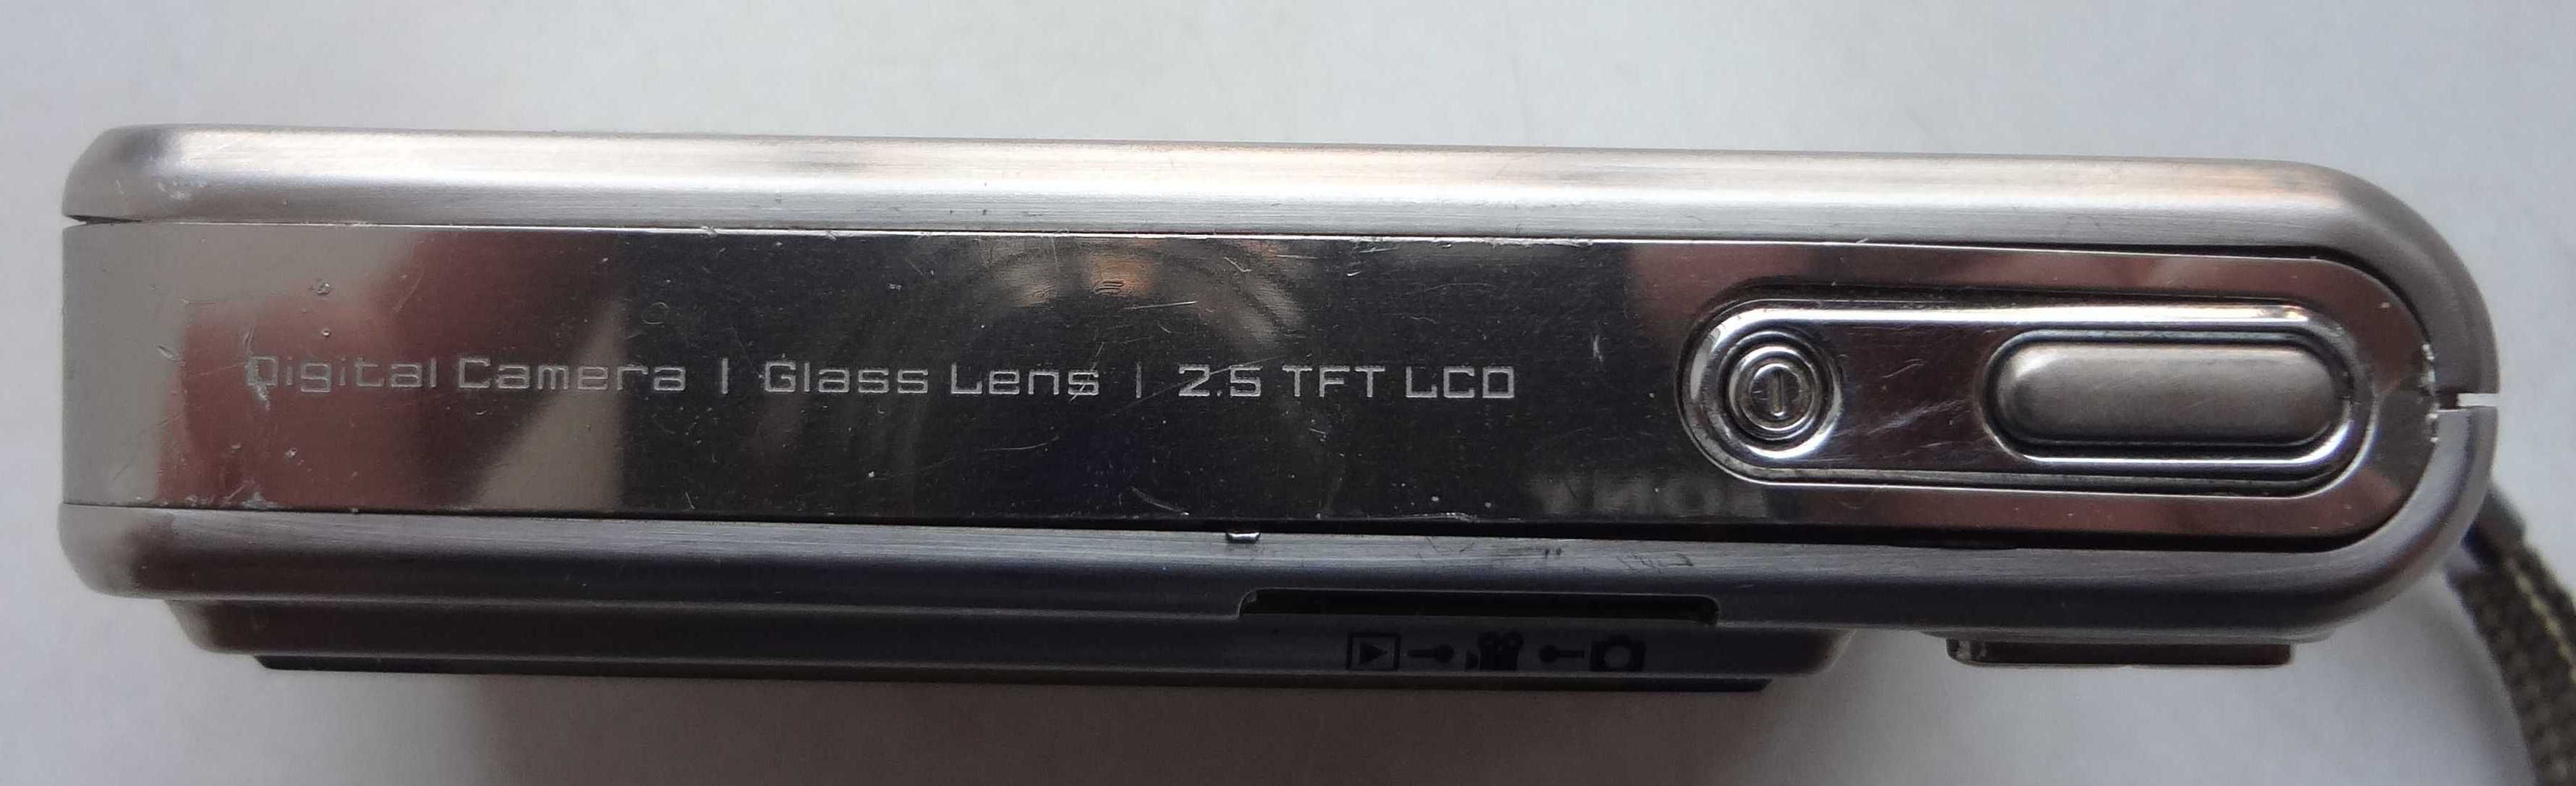 Фотоаппарат цифровой UFO DS 5370 на детали